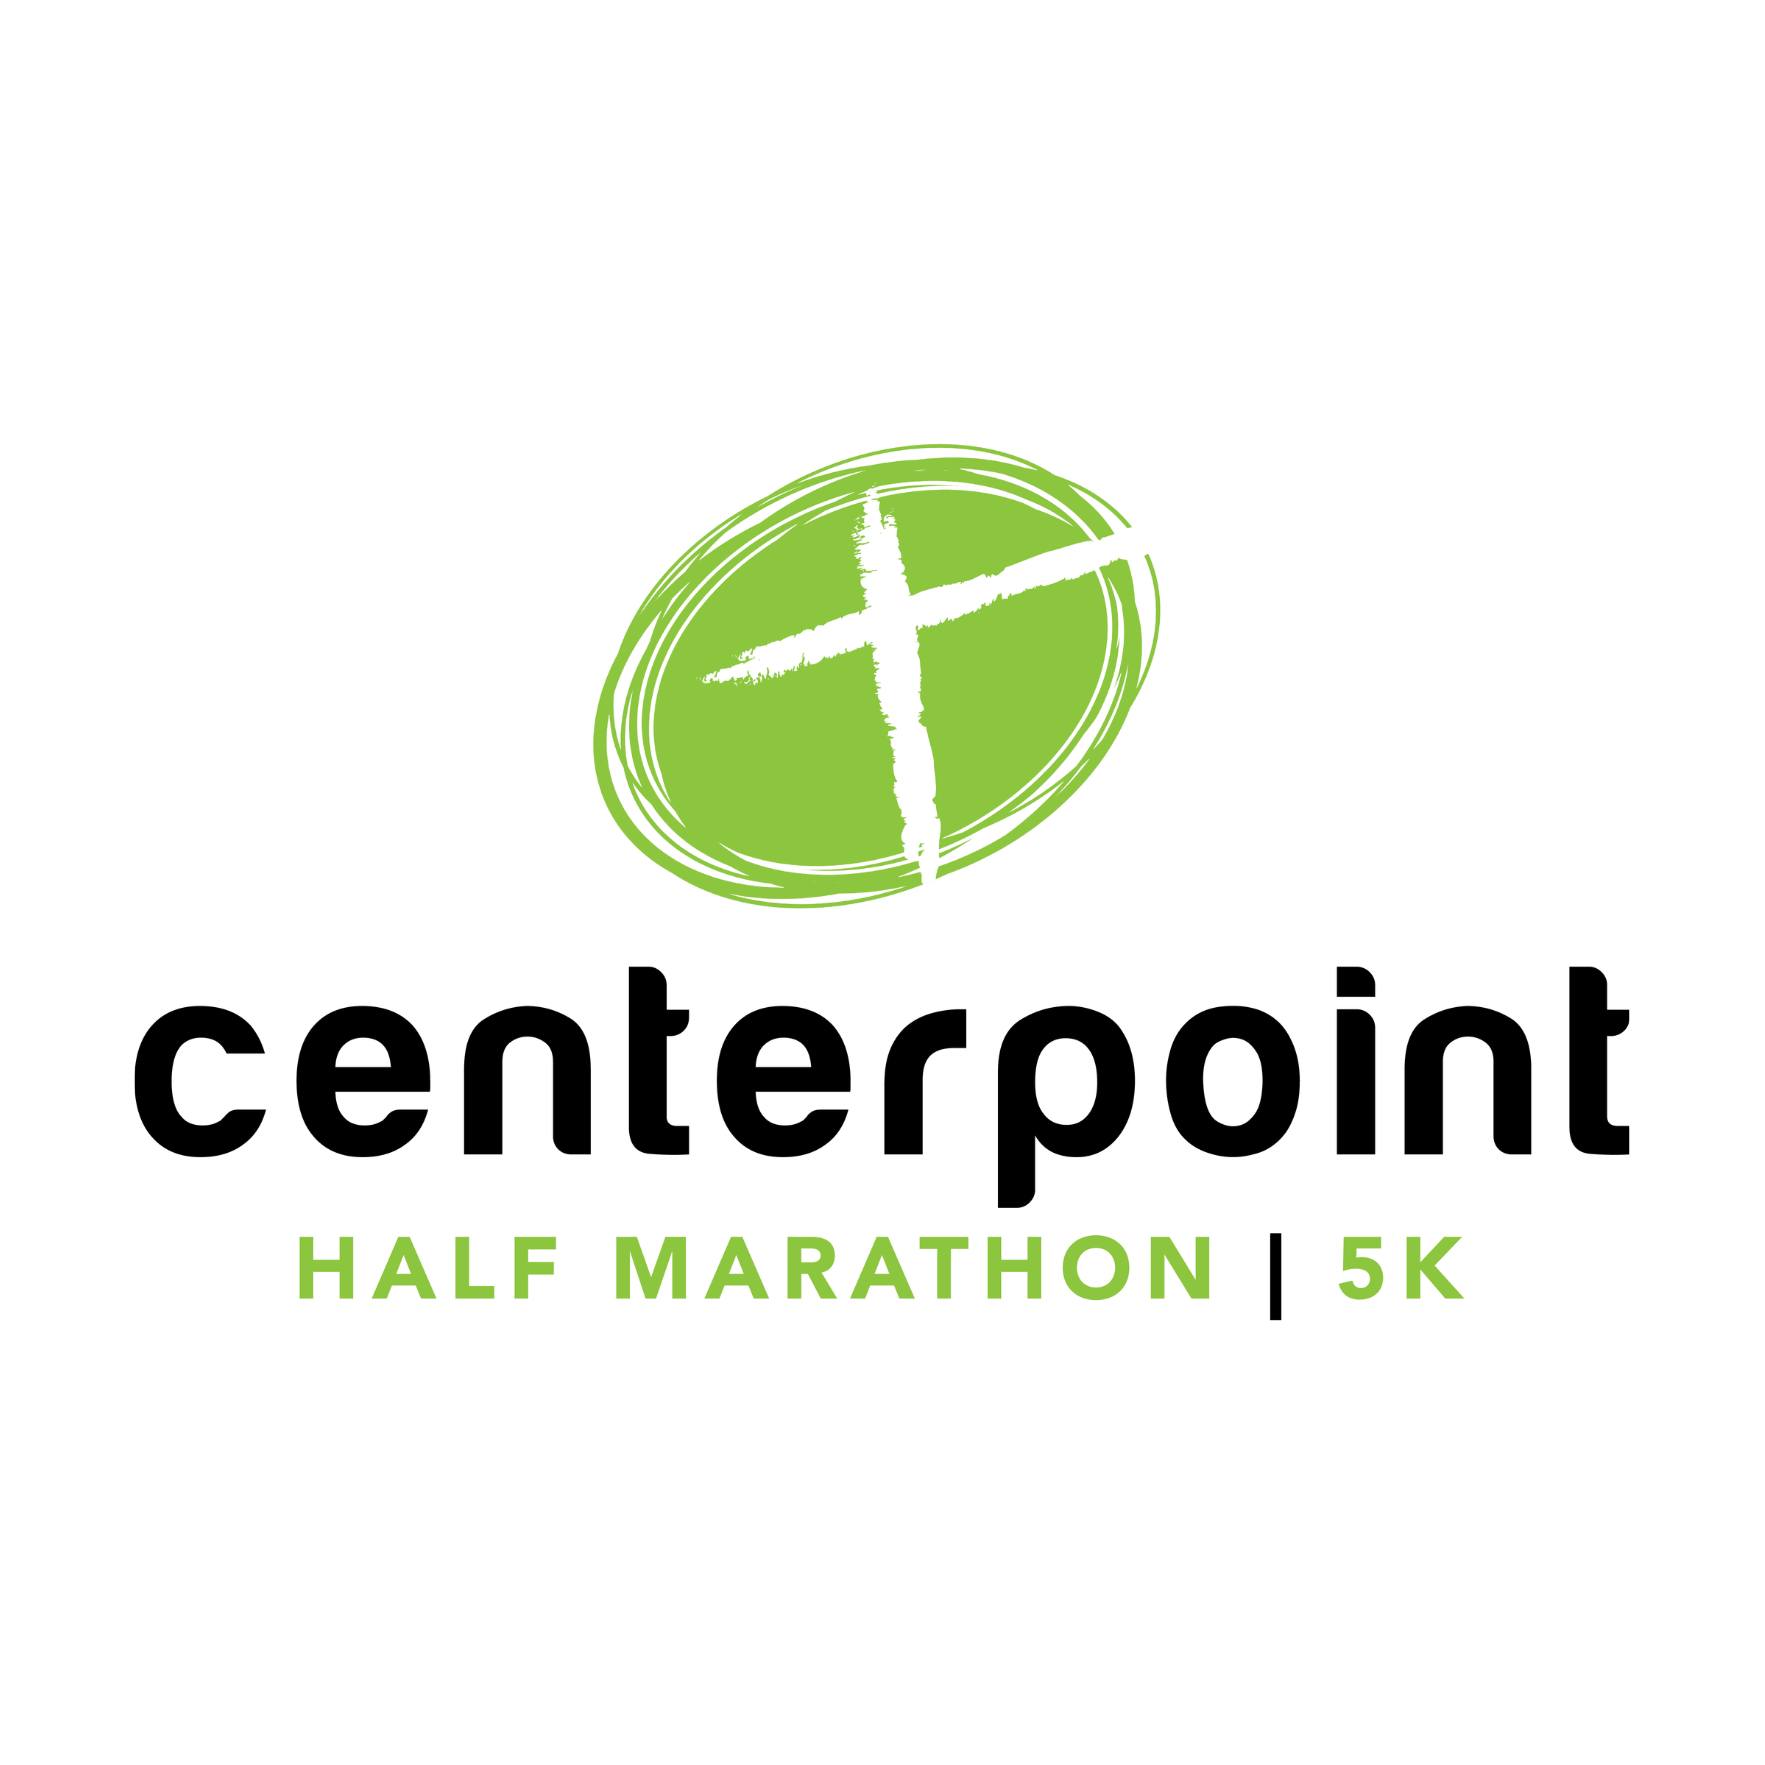 Centerpoint Half Marathon & 5K logo on RaceRaves